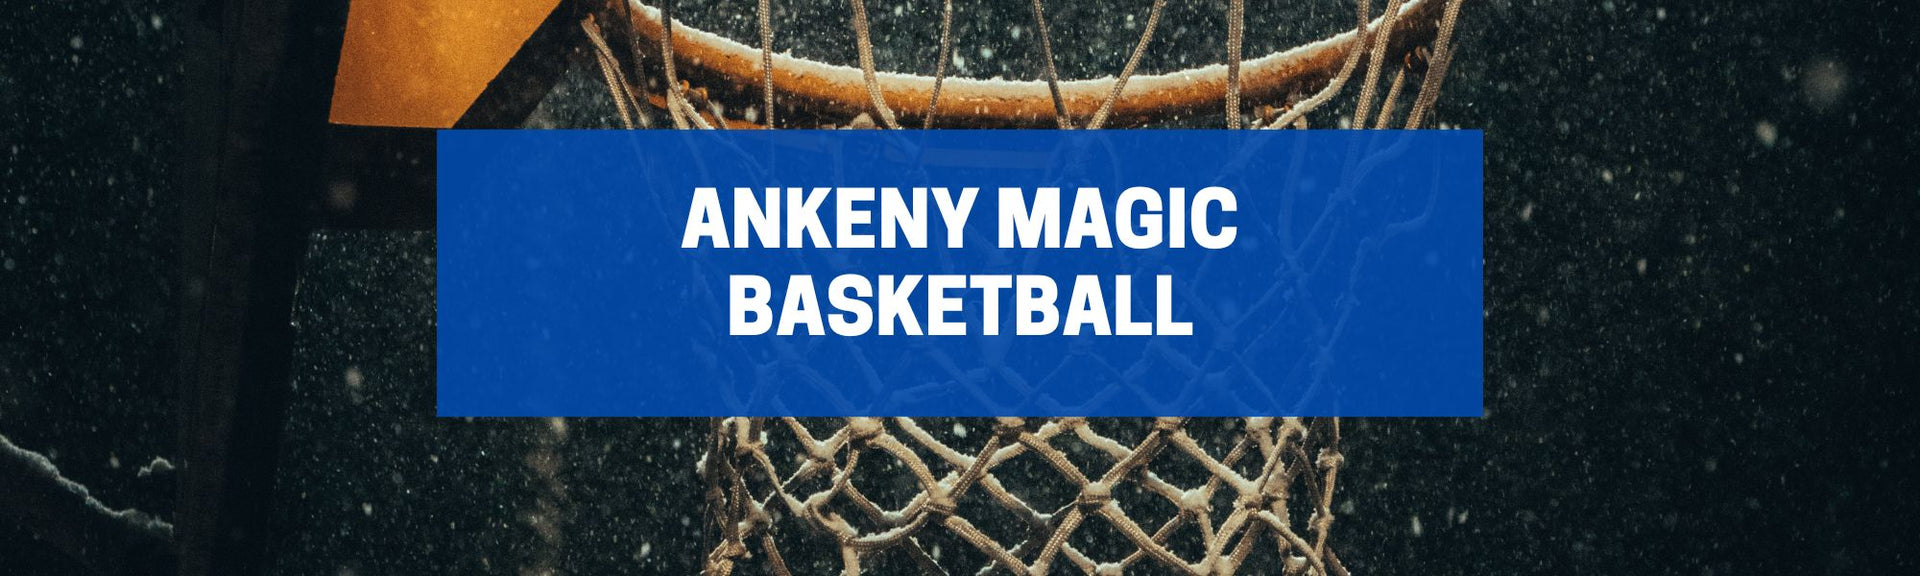 Ankeny Magic Basketball